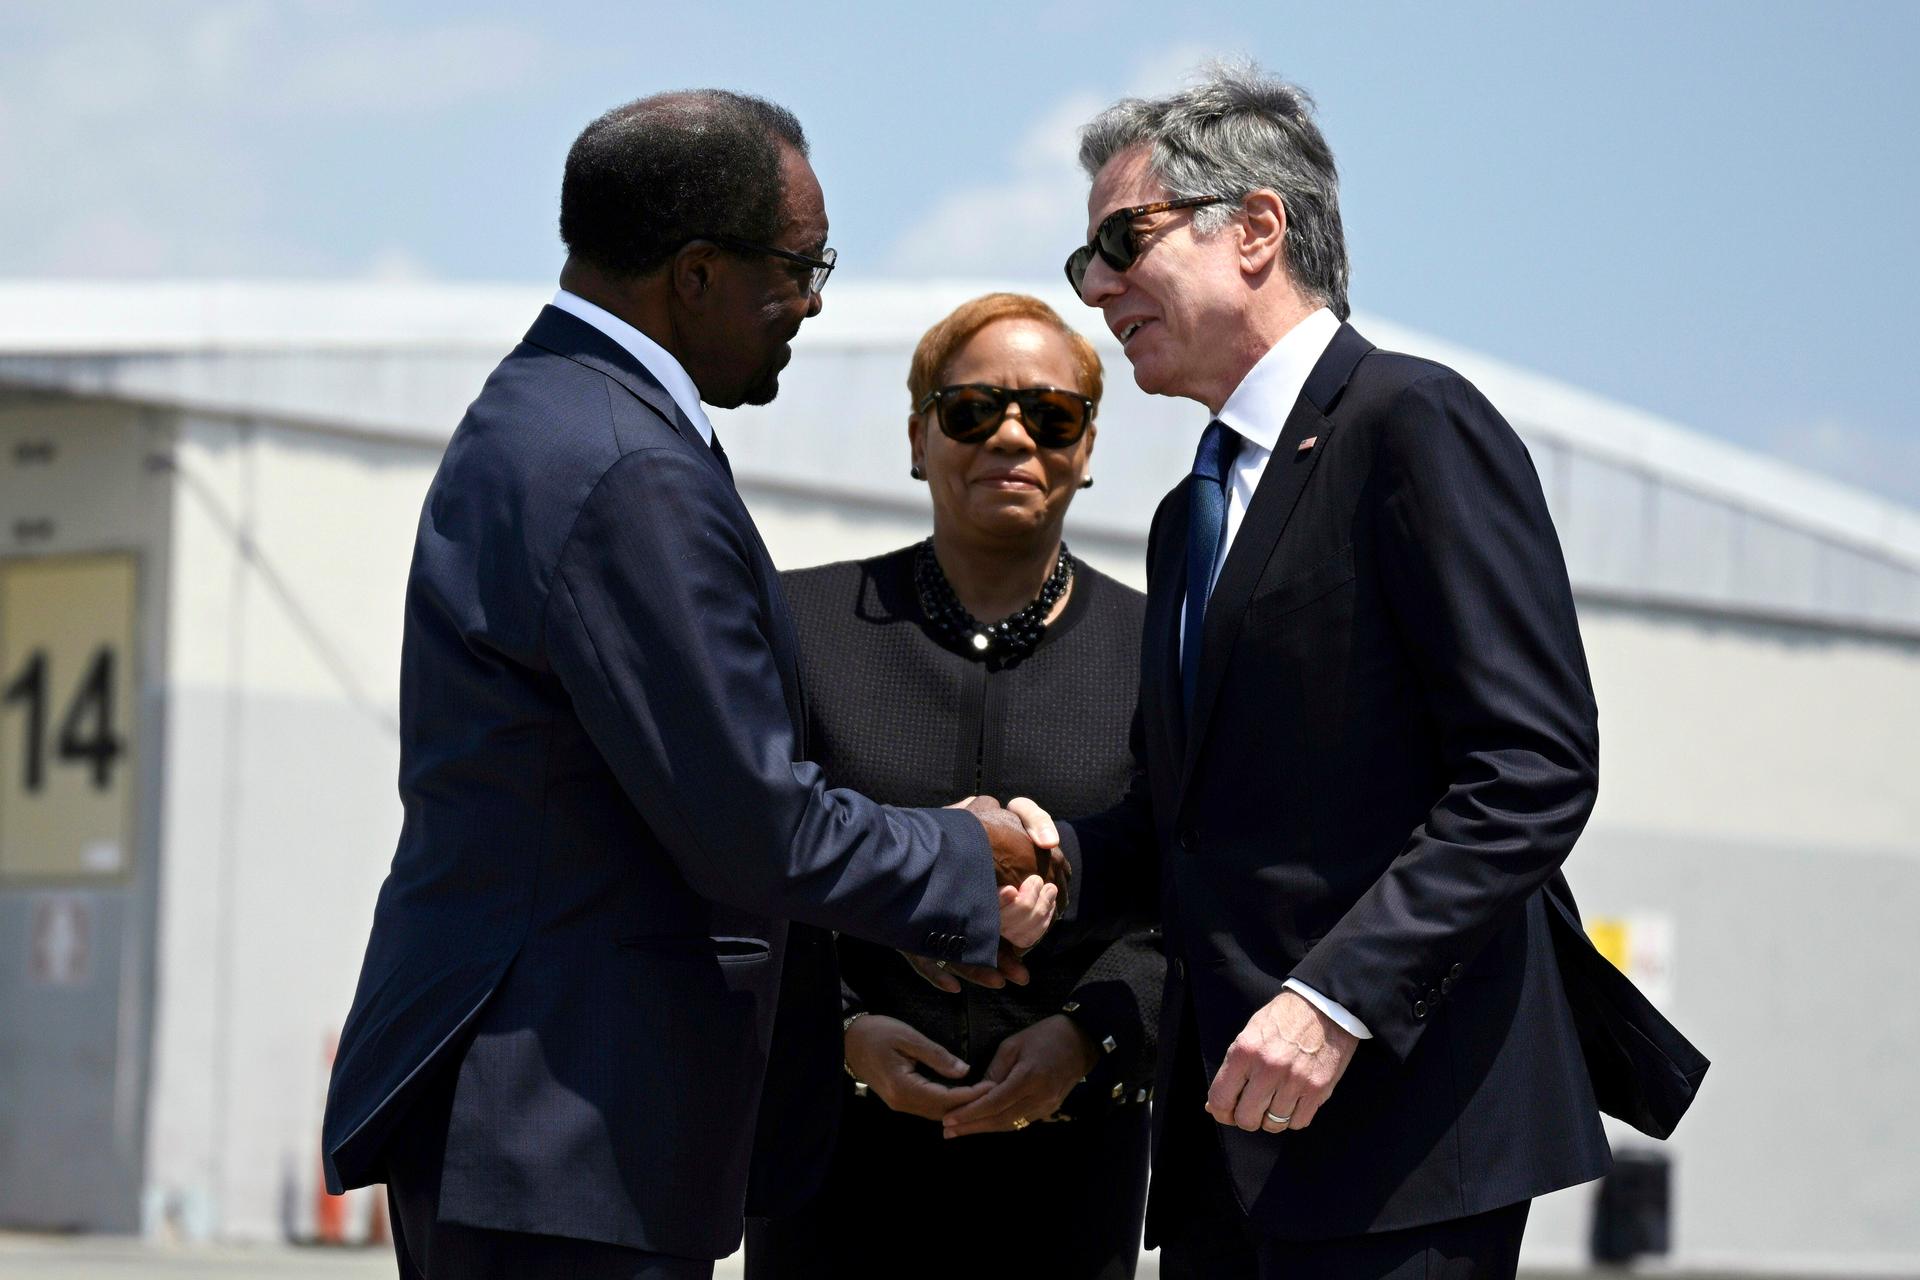 Secretary Blinken and the US ambassador to Jamaica shake hands